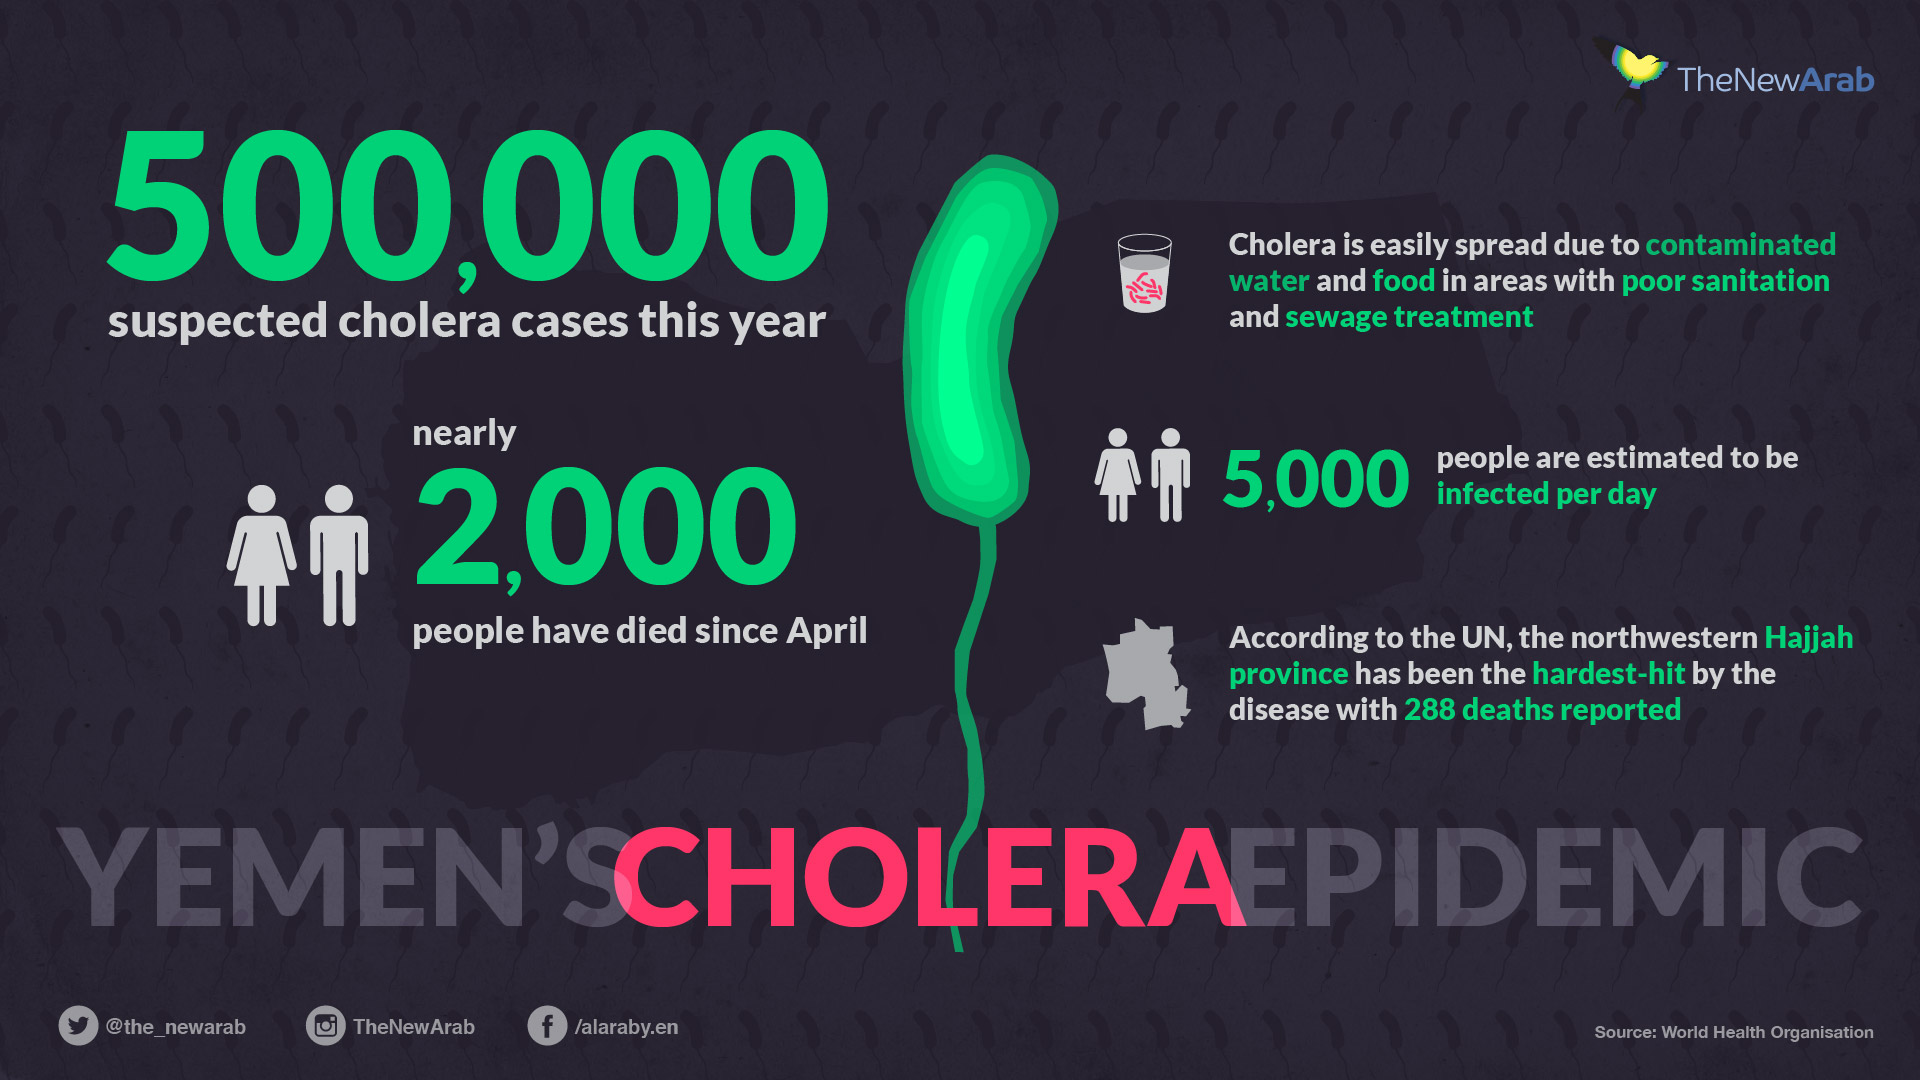 Yemens - cholera v3-01.jpg